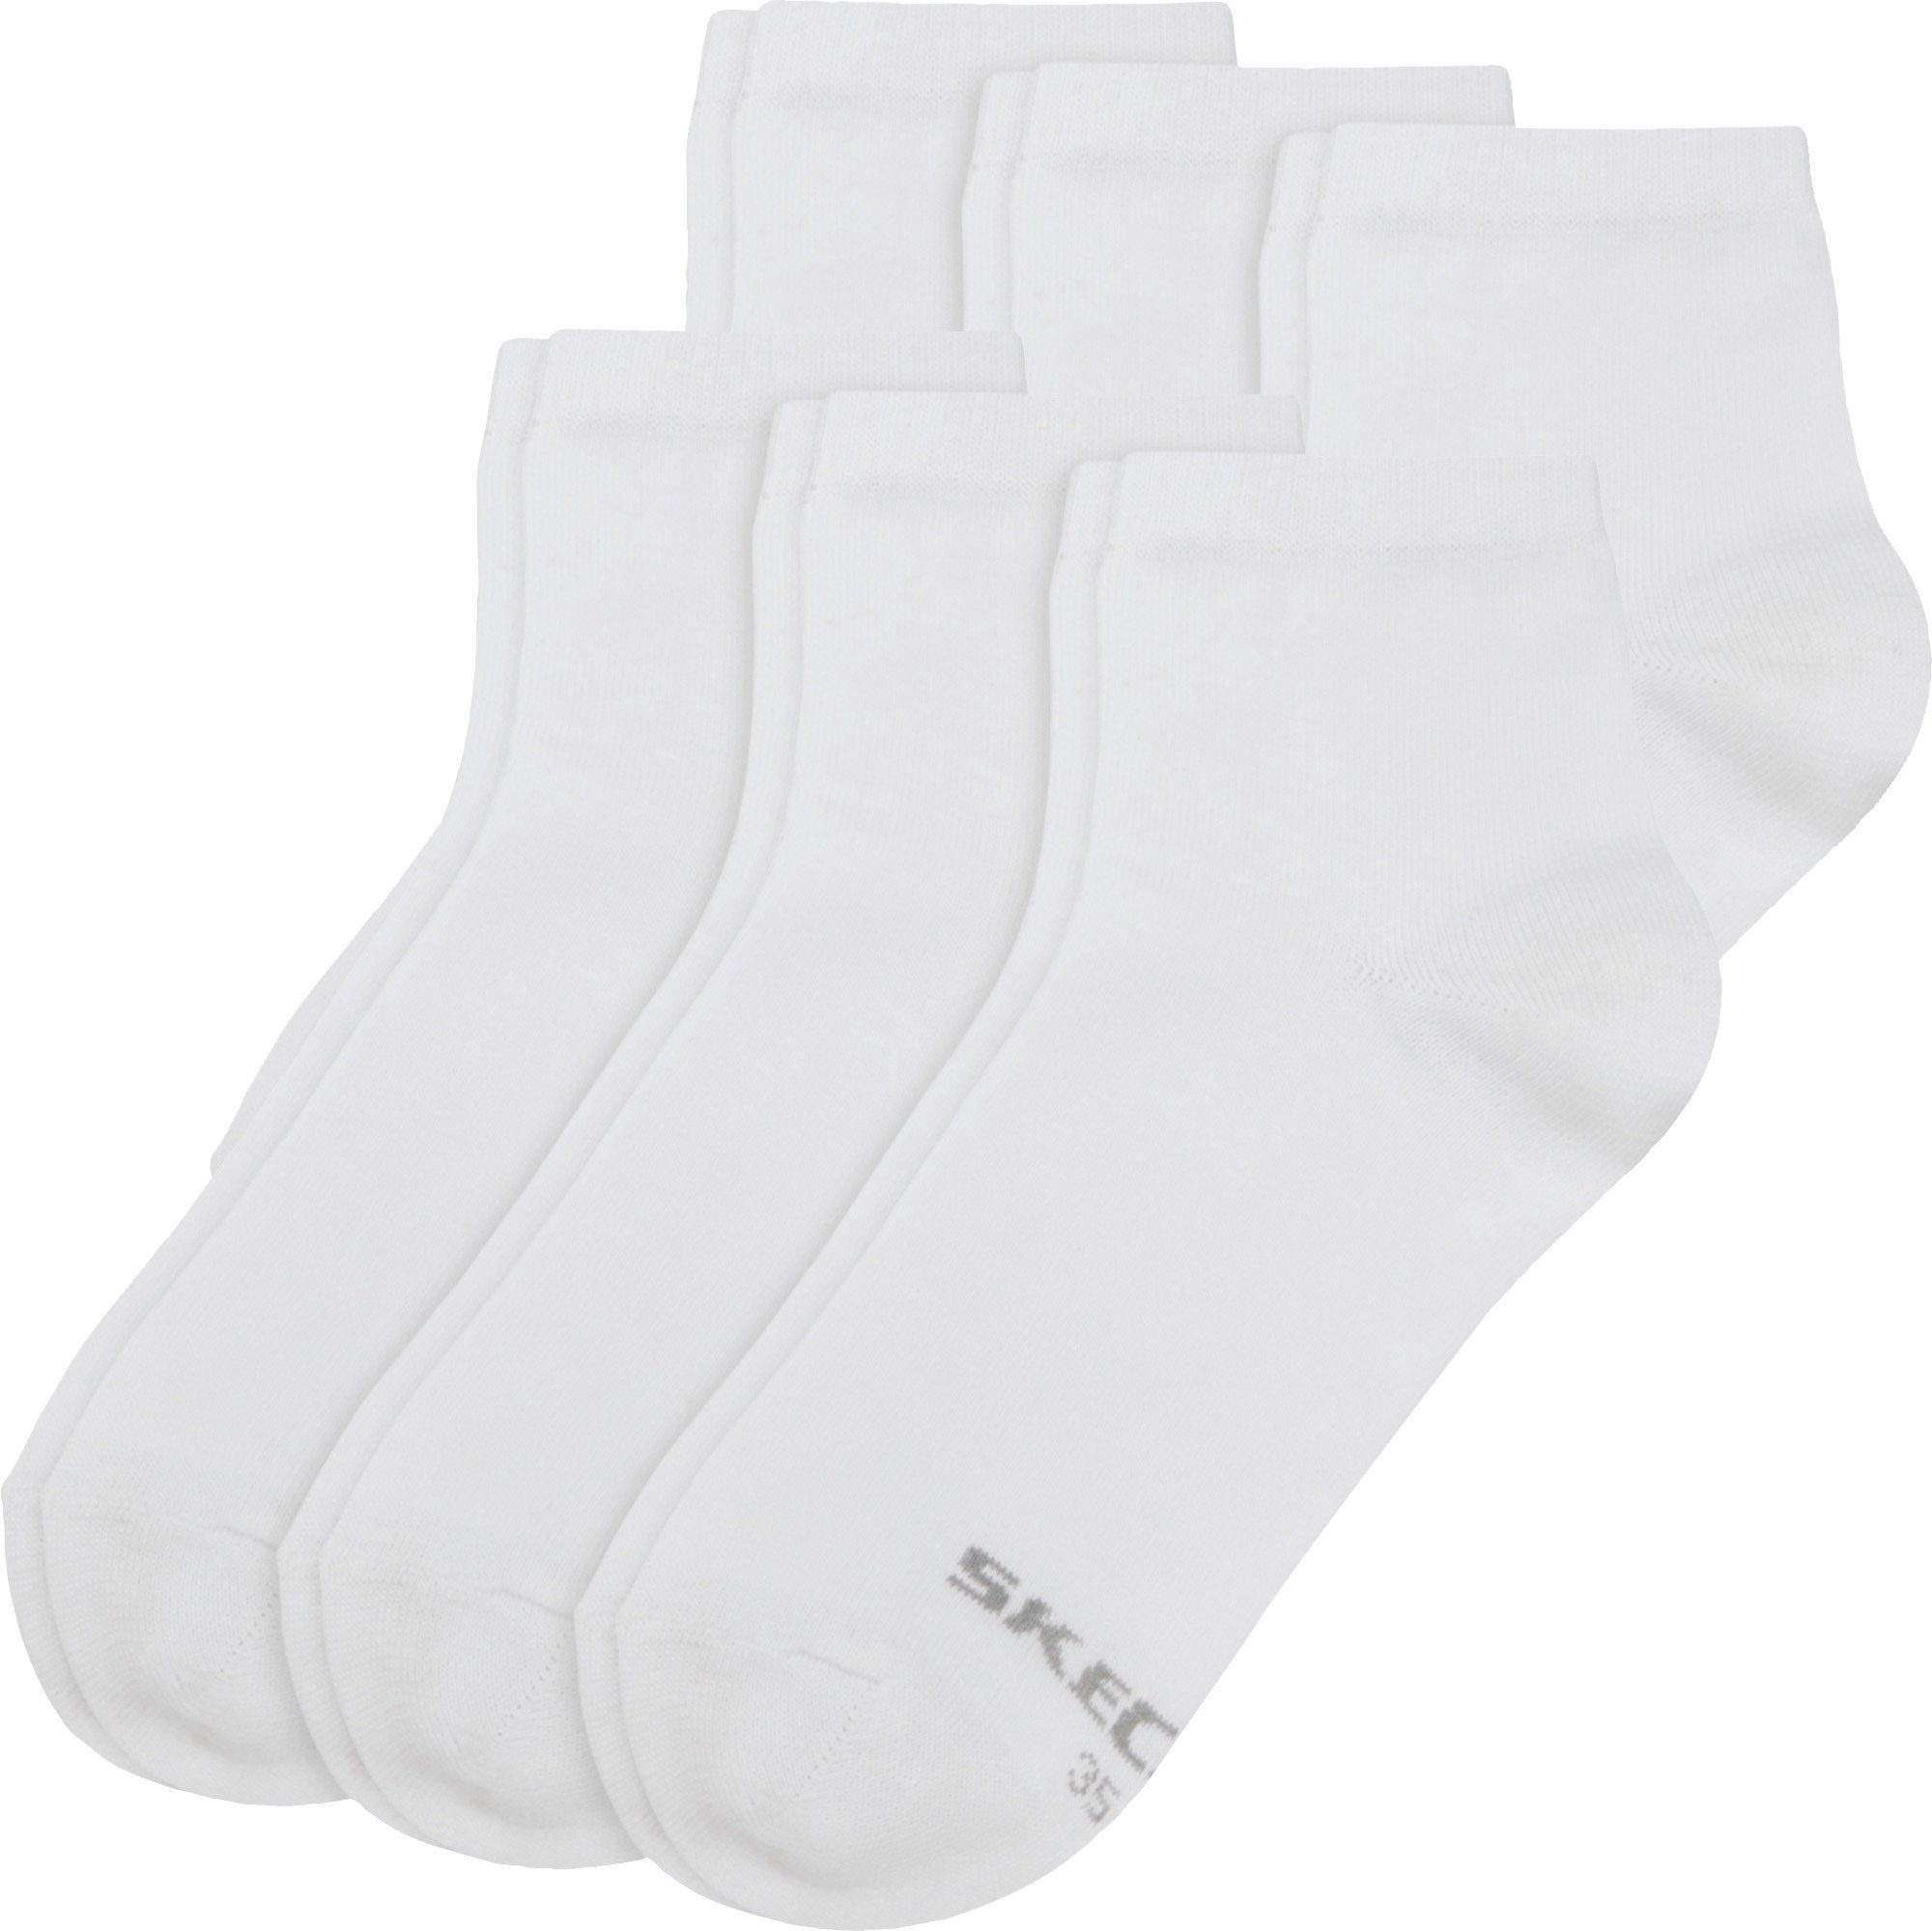 Skechers Socken Damen-Kurzsocken 6 Paar Uni weiß